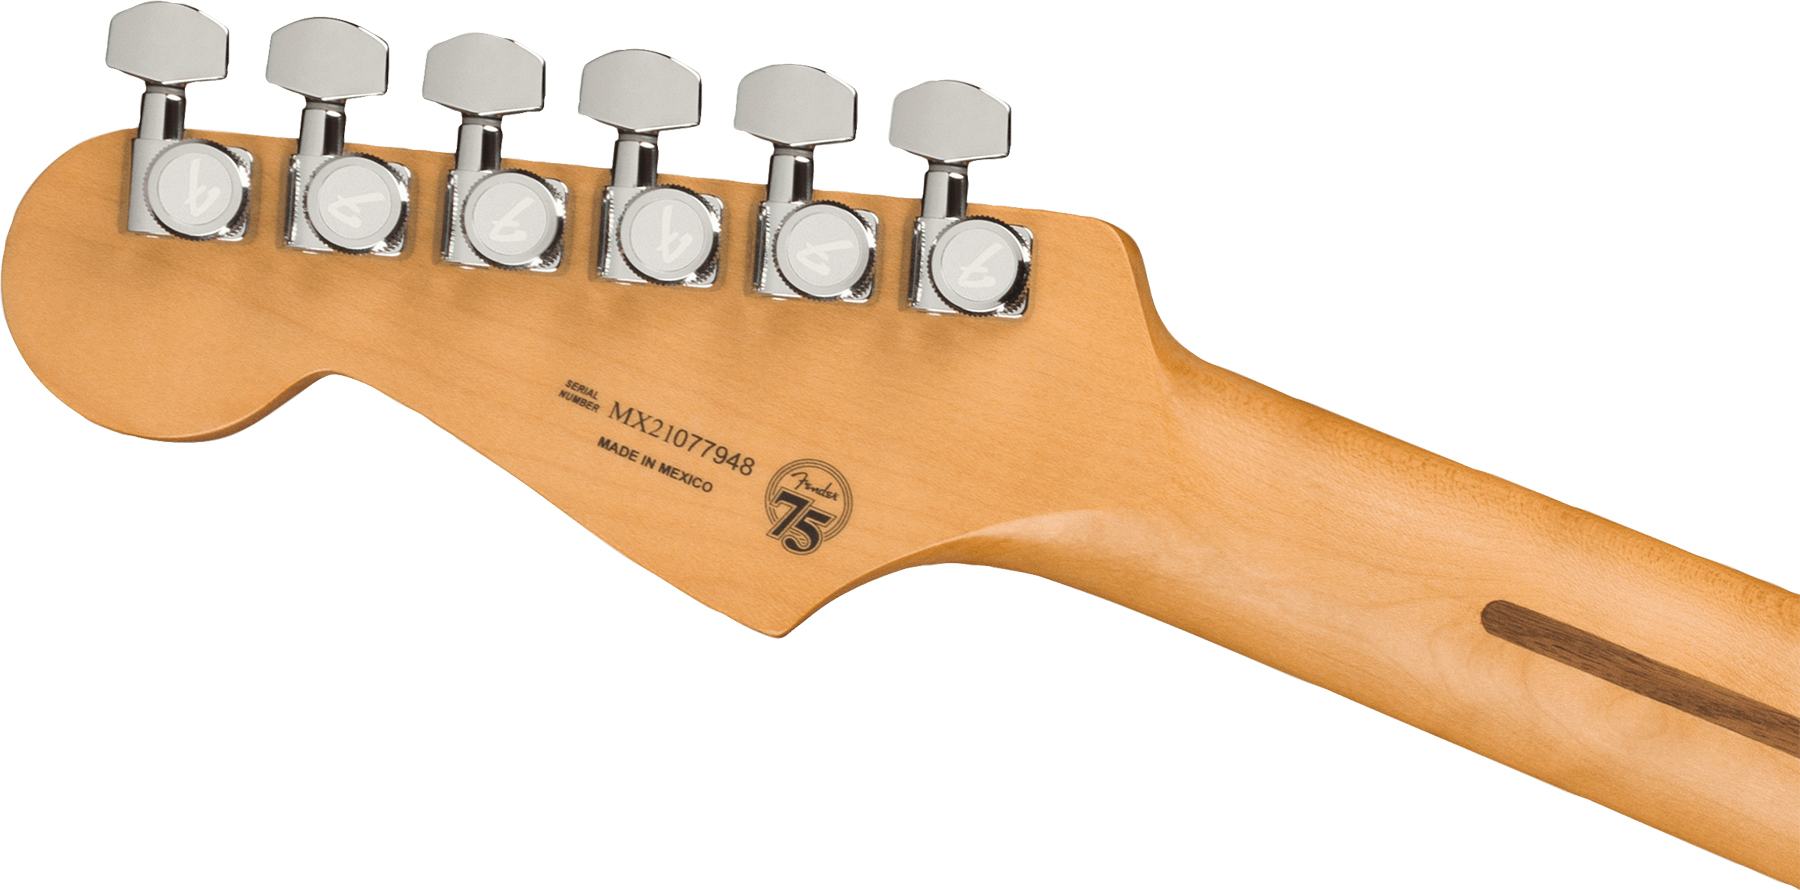 Fender Strat Player Plus Mex 3s Trem Pf - Aged Candy Apple Red - Guitarra eléctrica con forma de str. - Variation 3